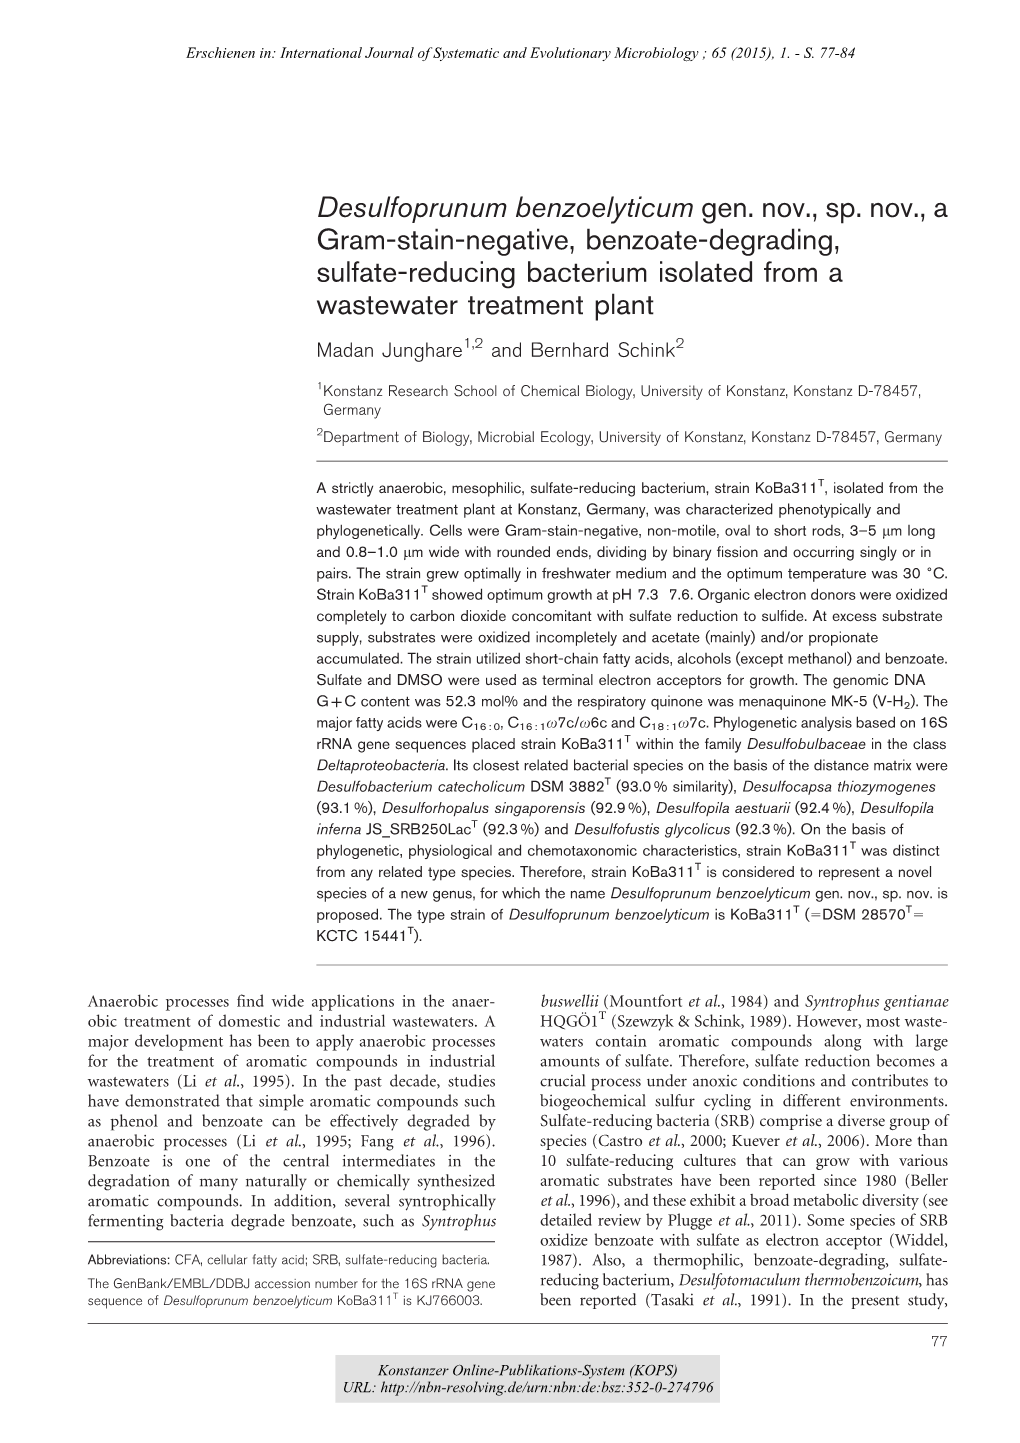 Desulfoprunum Benzoelyticum Gen. Nov., Sp. Nov., a Gram-Negative Benzoate-Degrading Sulfate-Reducing Bacterium Isolated From